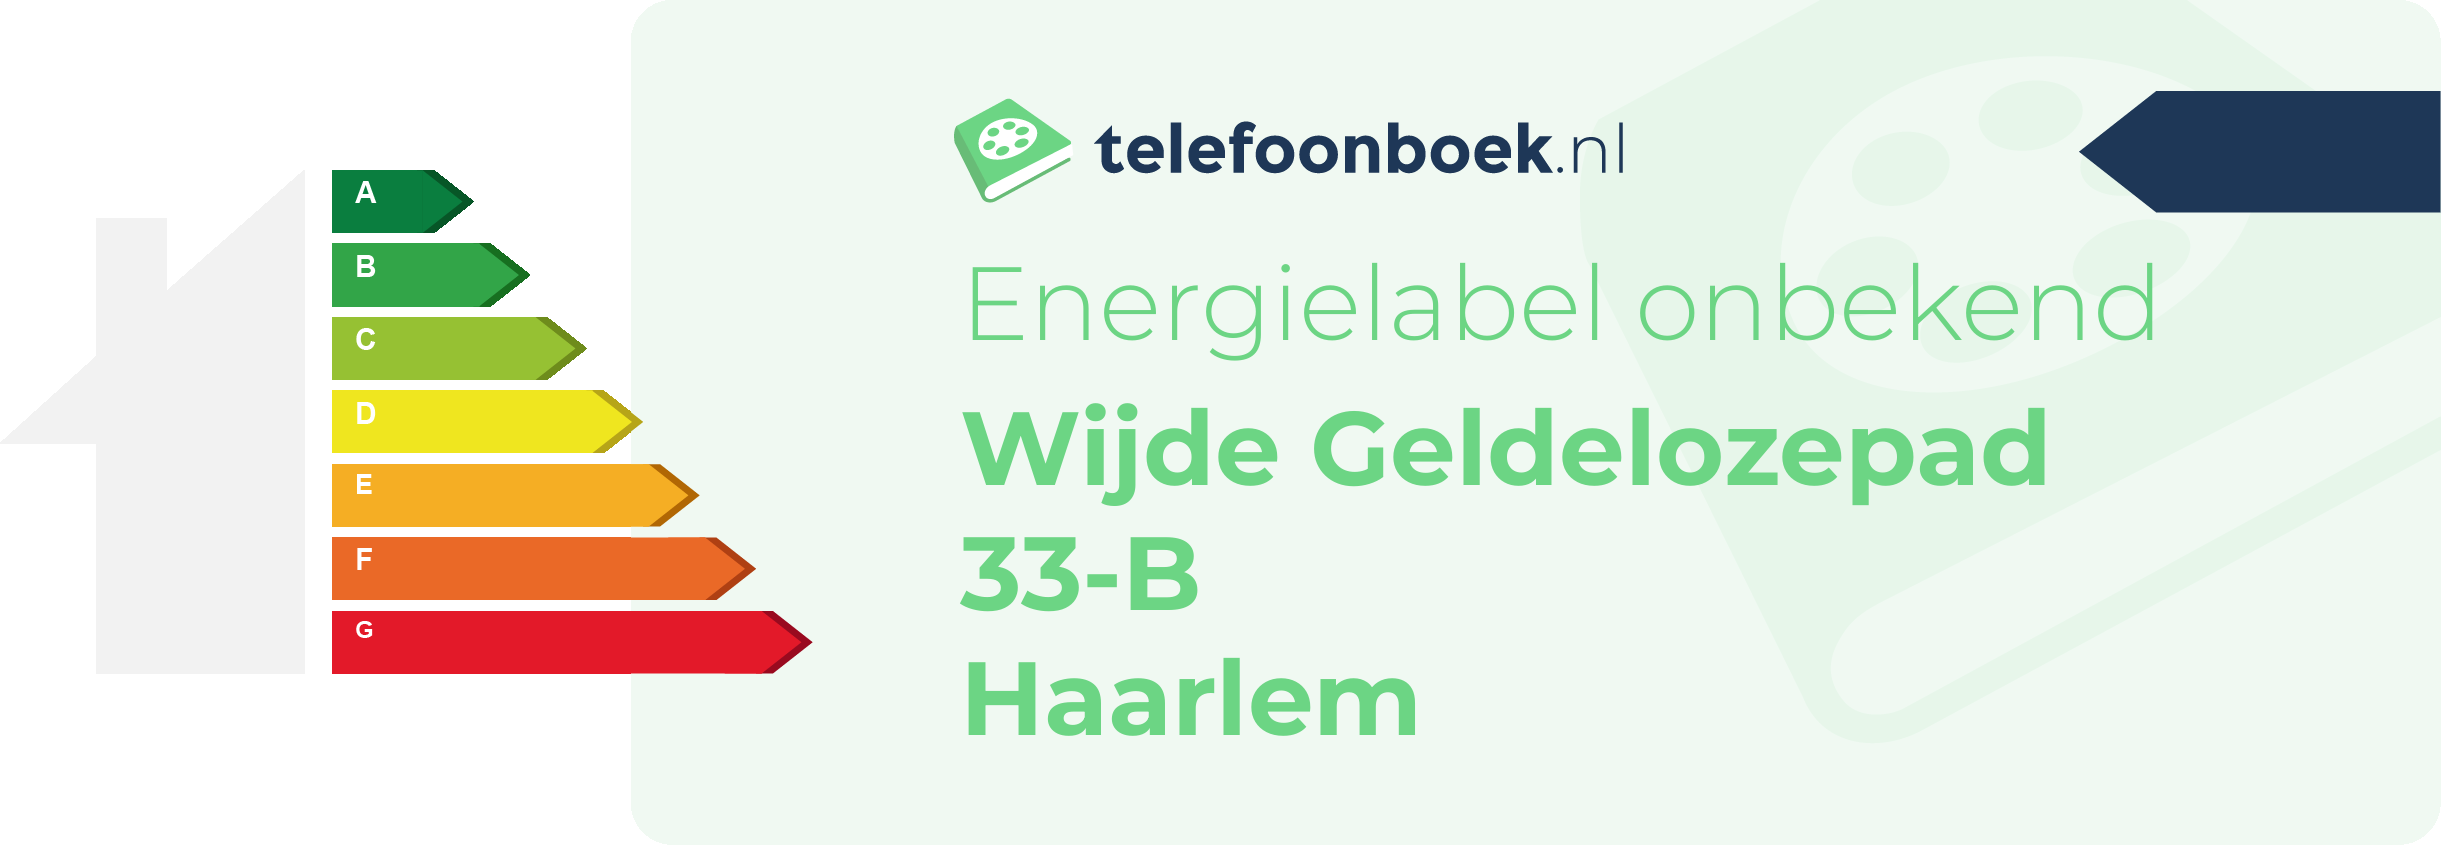 Energielabel Wijde Geldelozepad 33-B Haarlem